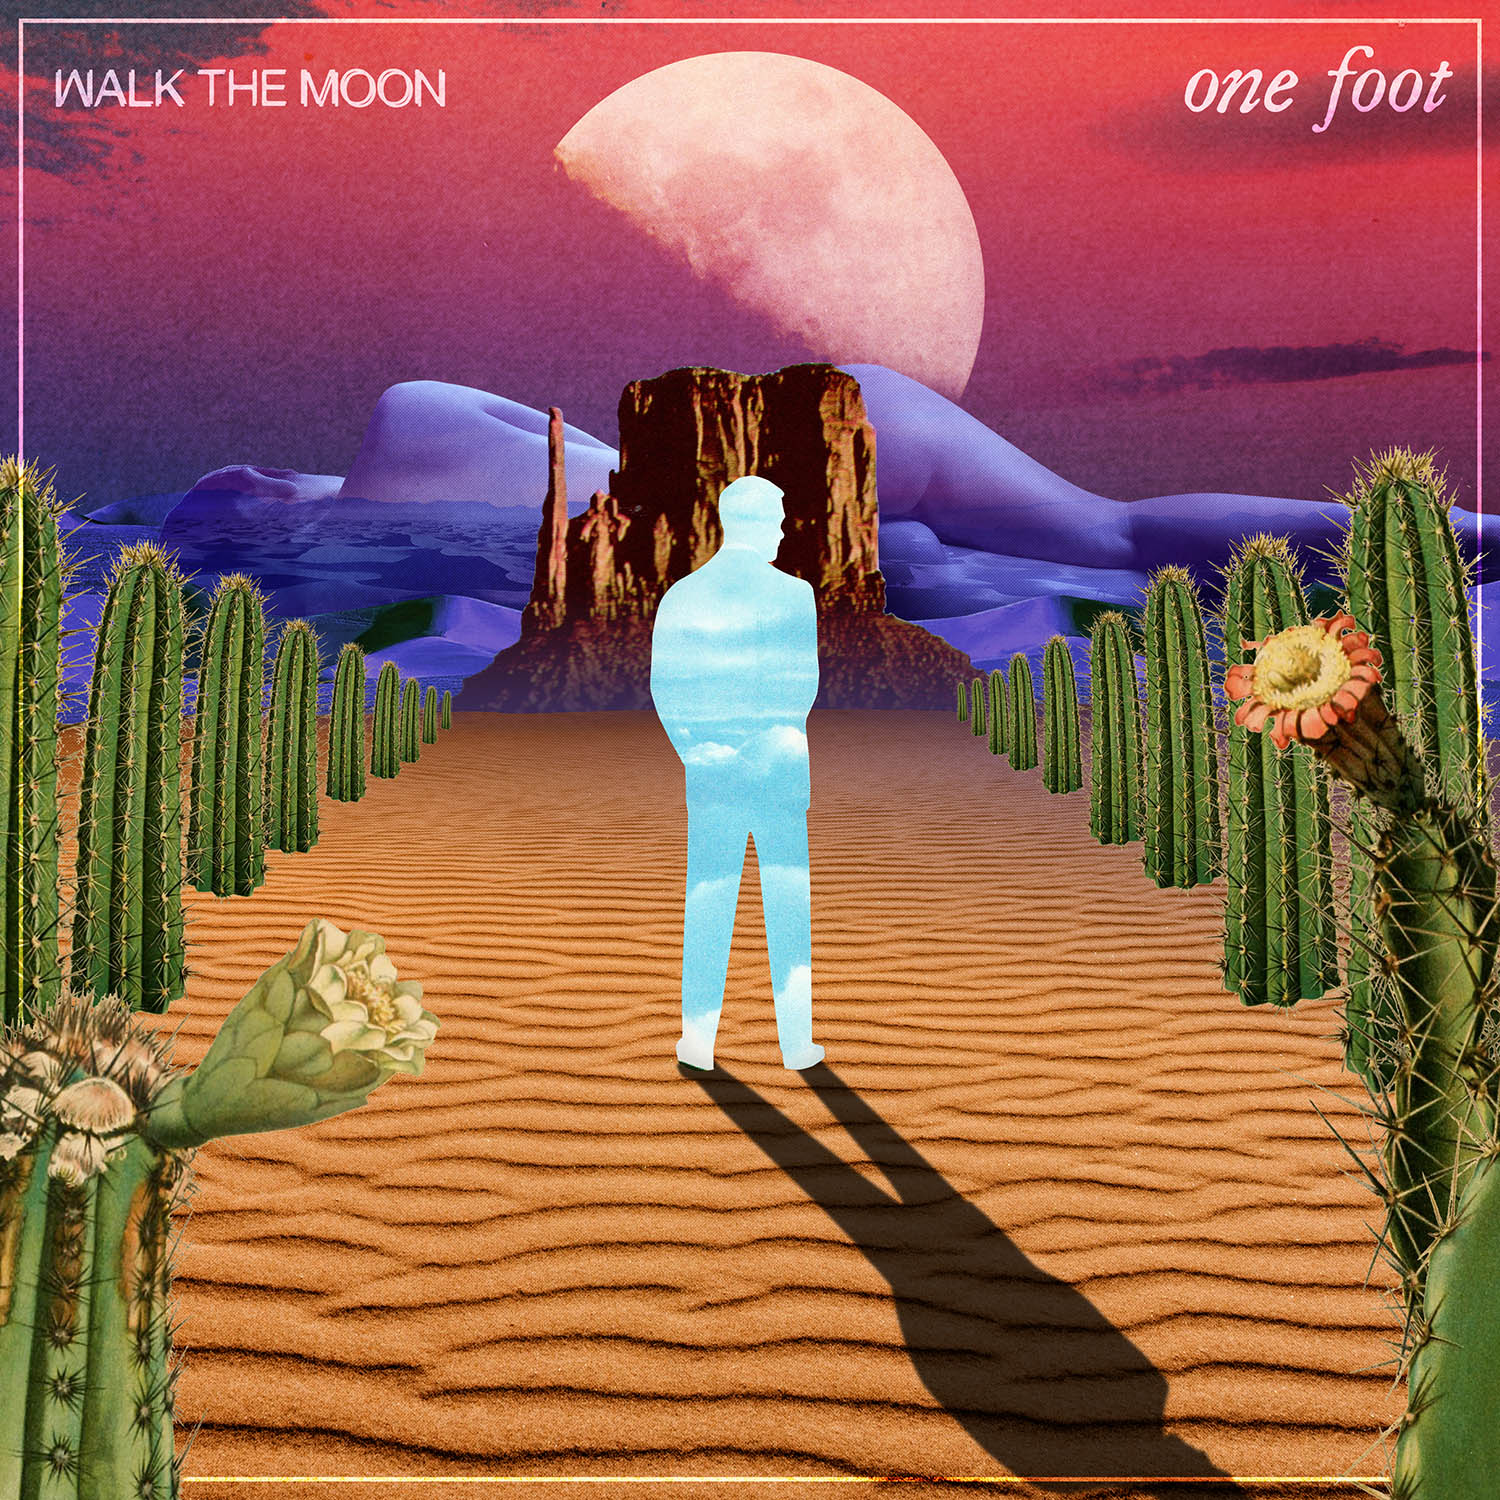 one foot walk the moon album art